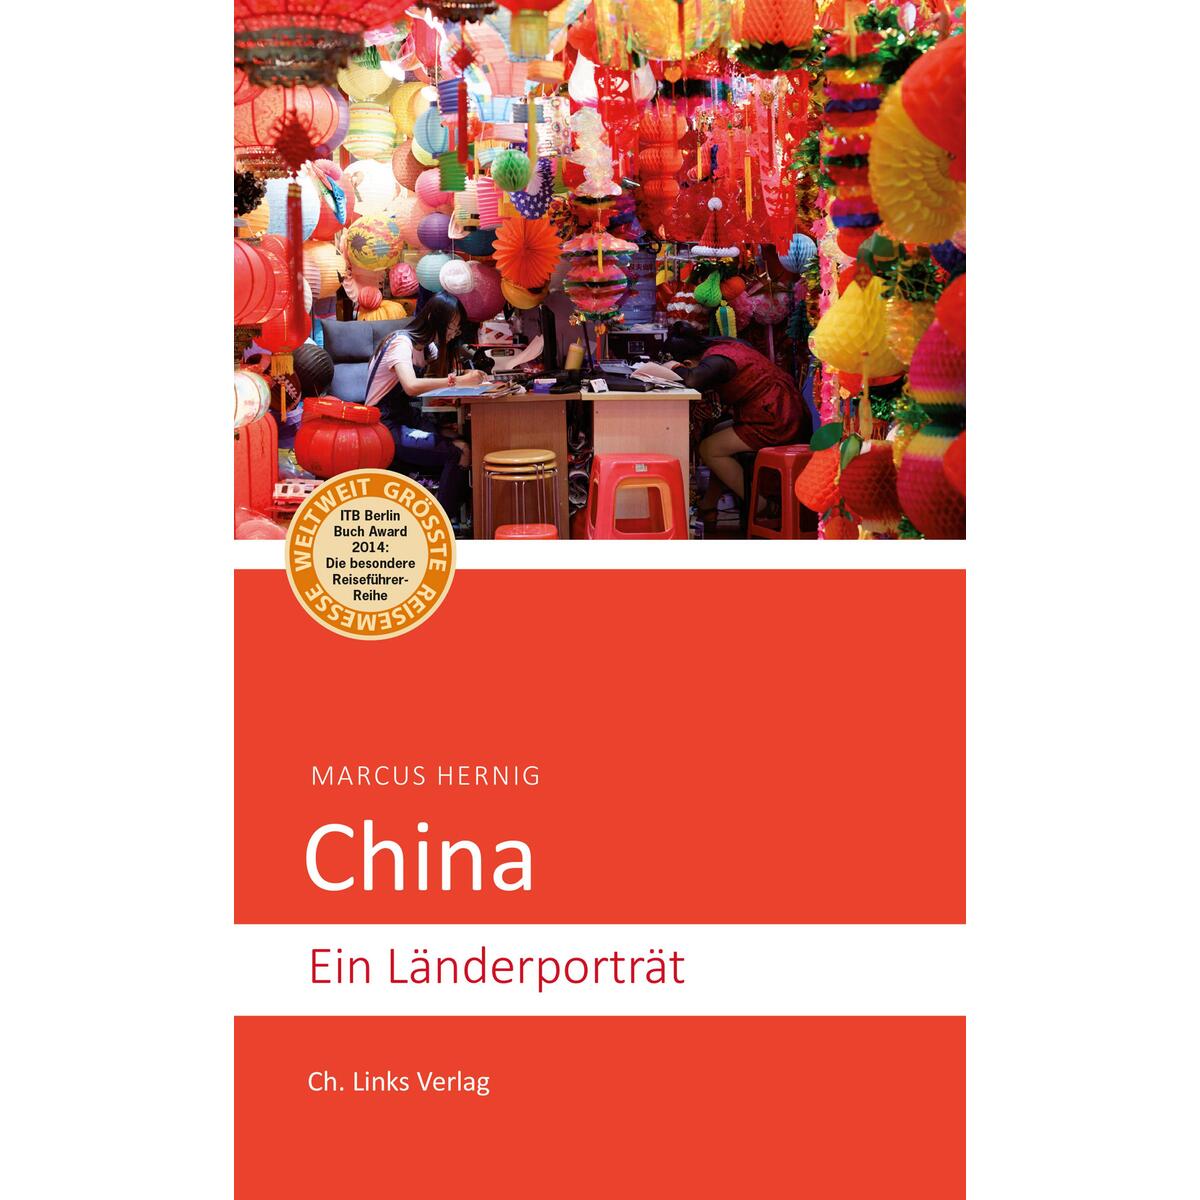 China von Christoph Links Verlag